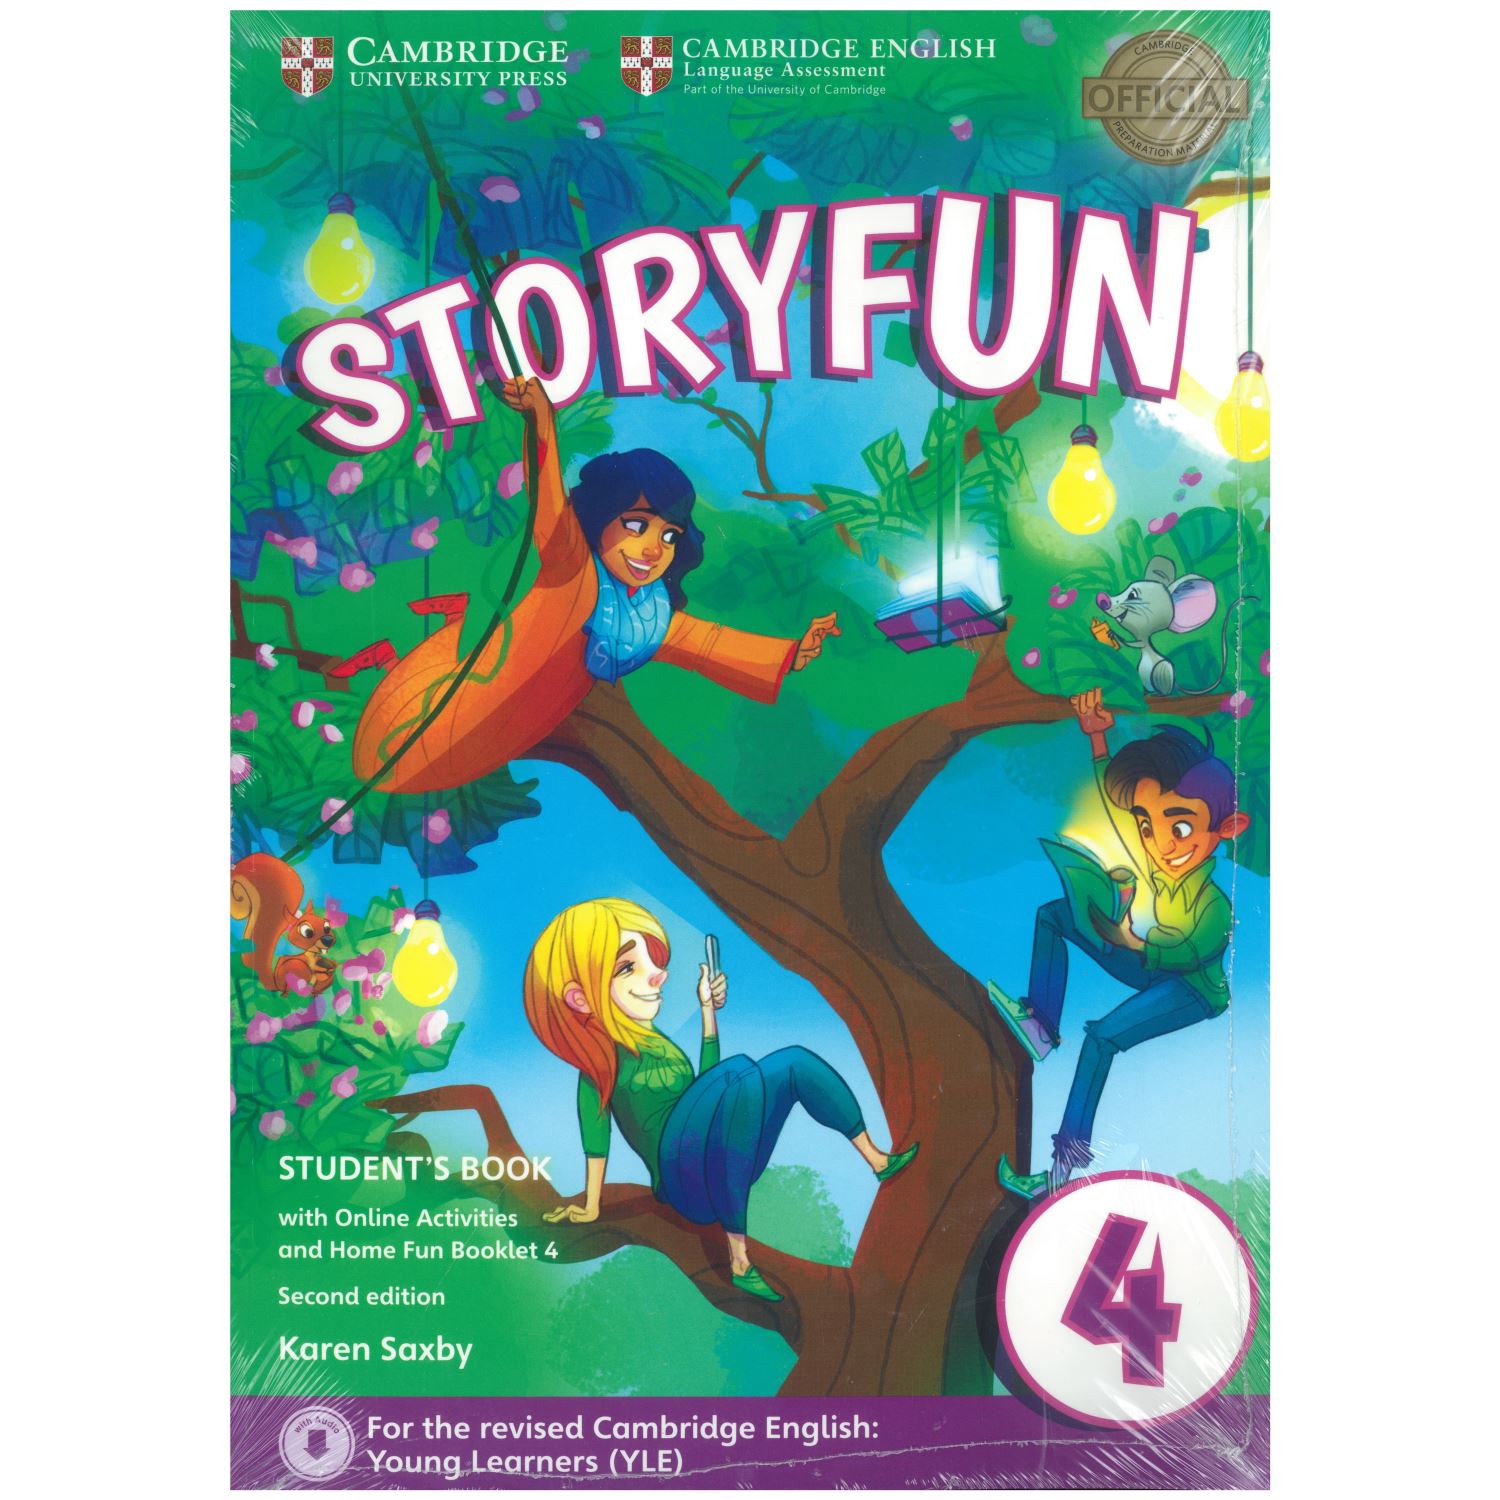 Home fun booklet. Книга storyfun for Movers. Storyfun 3 Home fun booklet. Storyfun 4. Учебник storyfun.